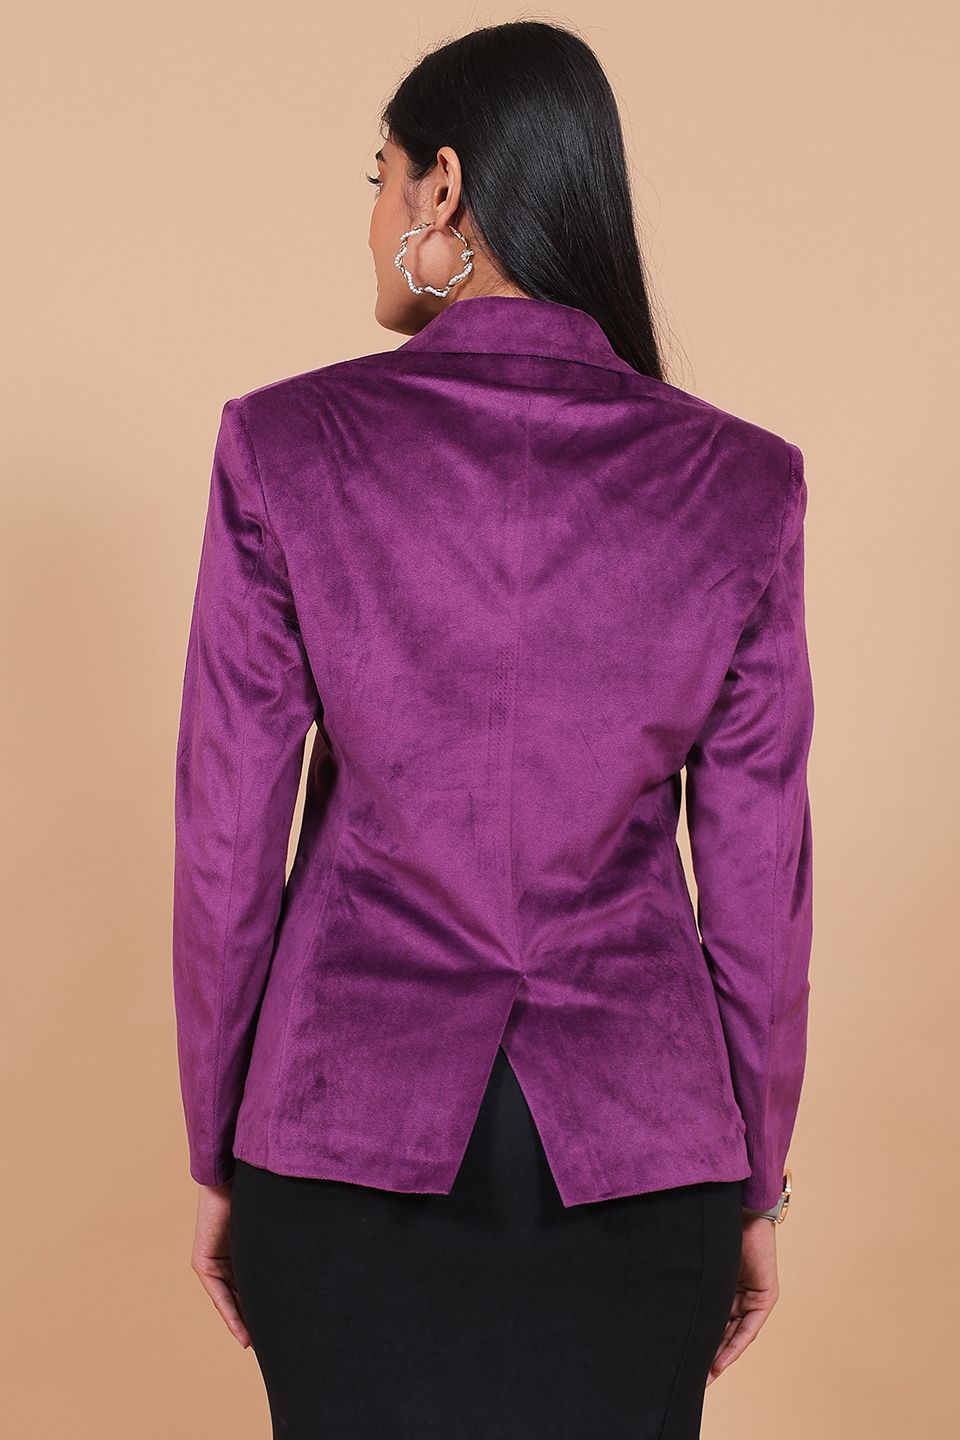 Cotton Velvet Purple Blazer